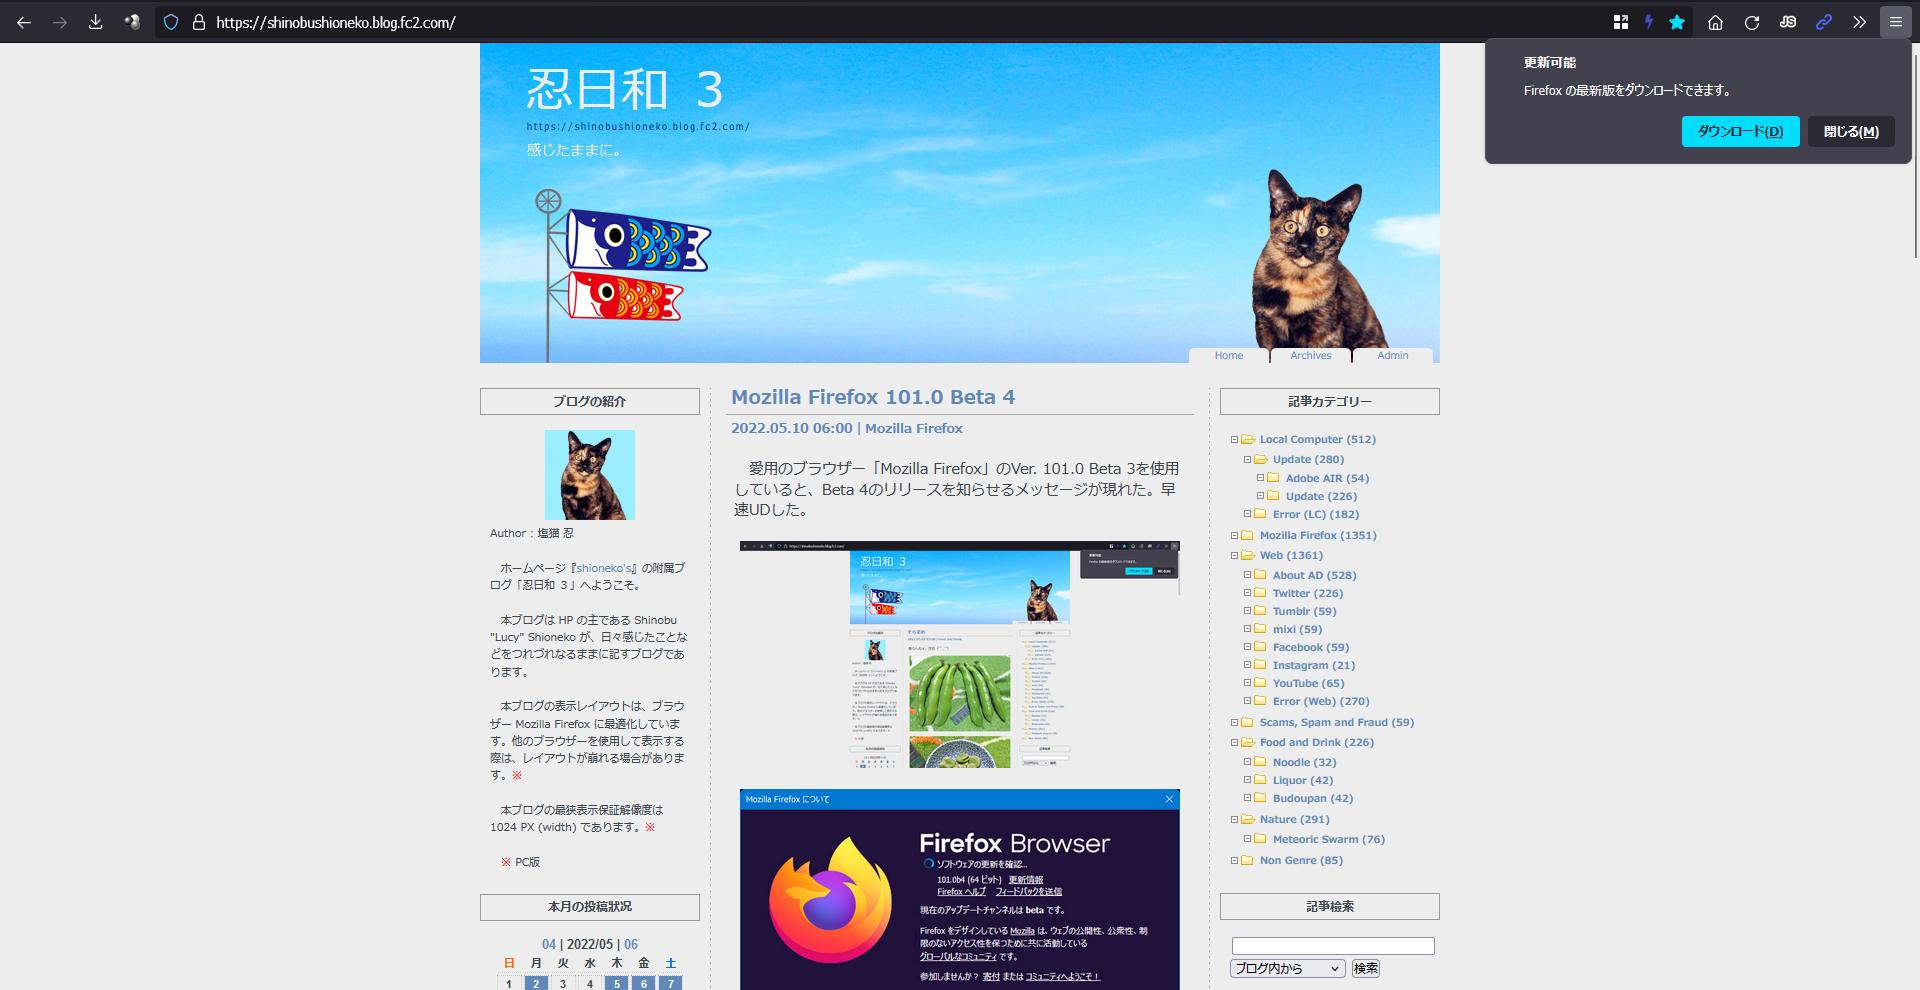 Mozilla Firefox 101.0 Beta 5